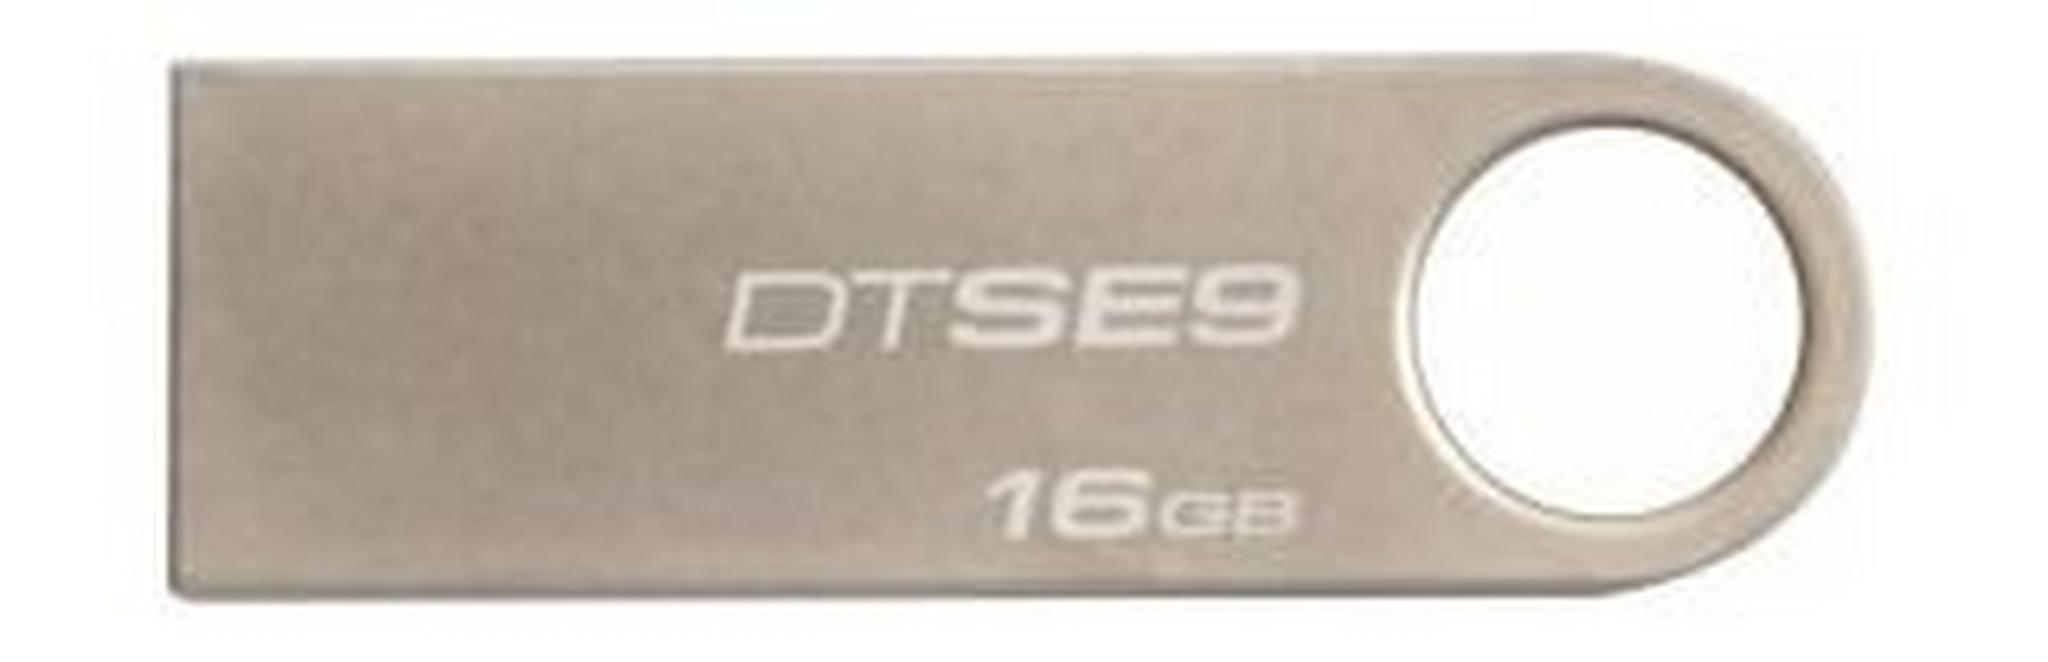 KINGSTON Digital DataTraveler SE9 16GB USB 2.0 Flash Drive - Grey